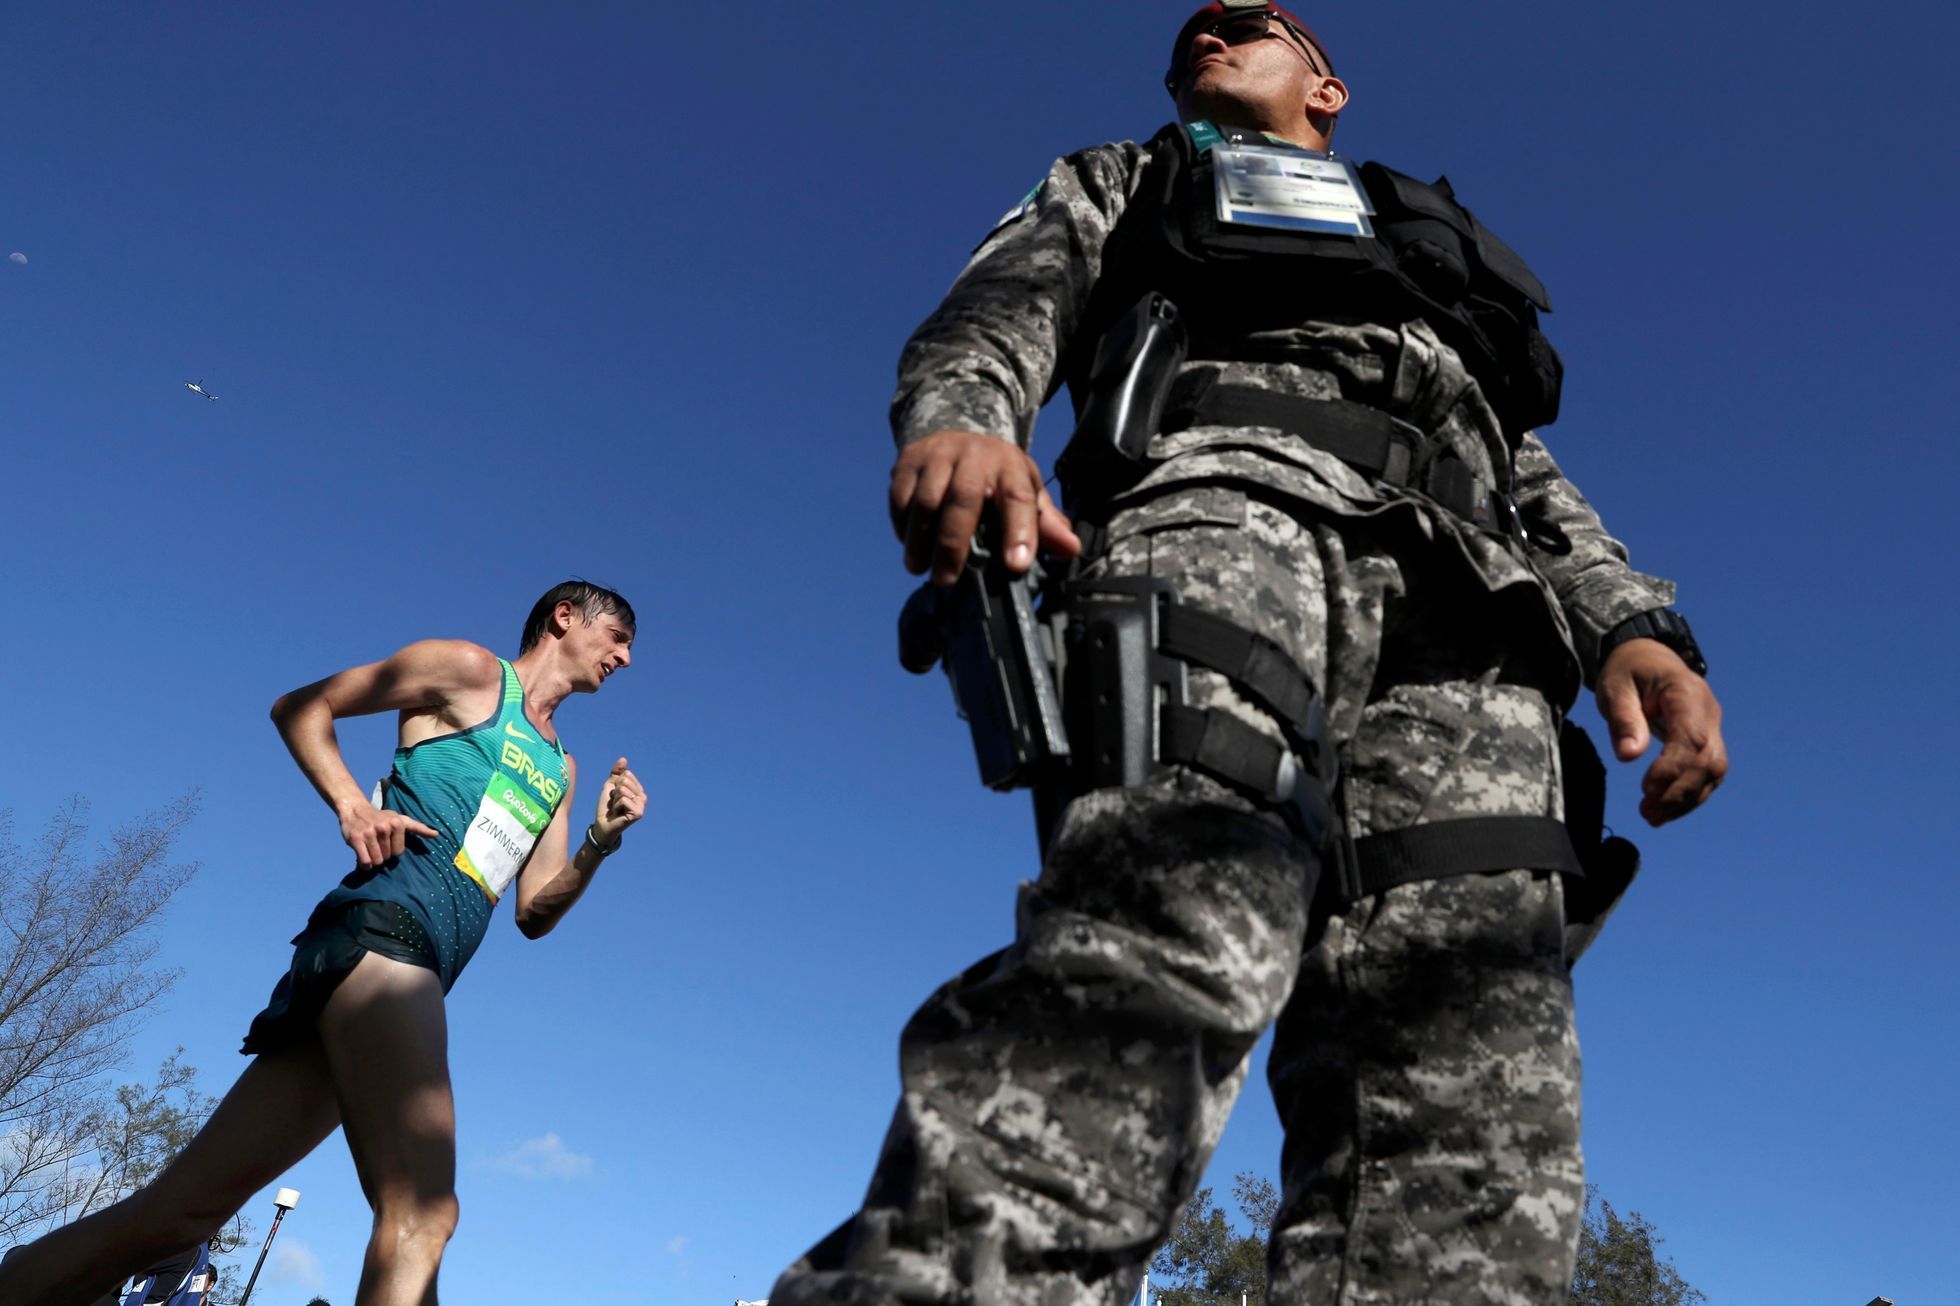 OH 2016 - atletika, 20 km chůze: Moacir Zimmermann (BRA) a policista